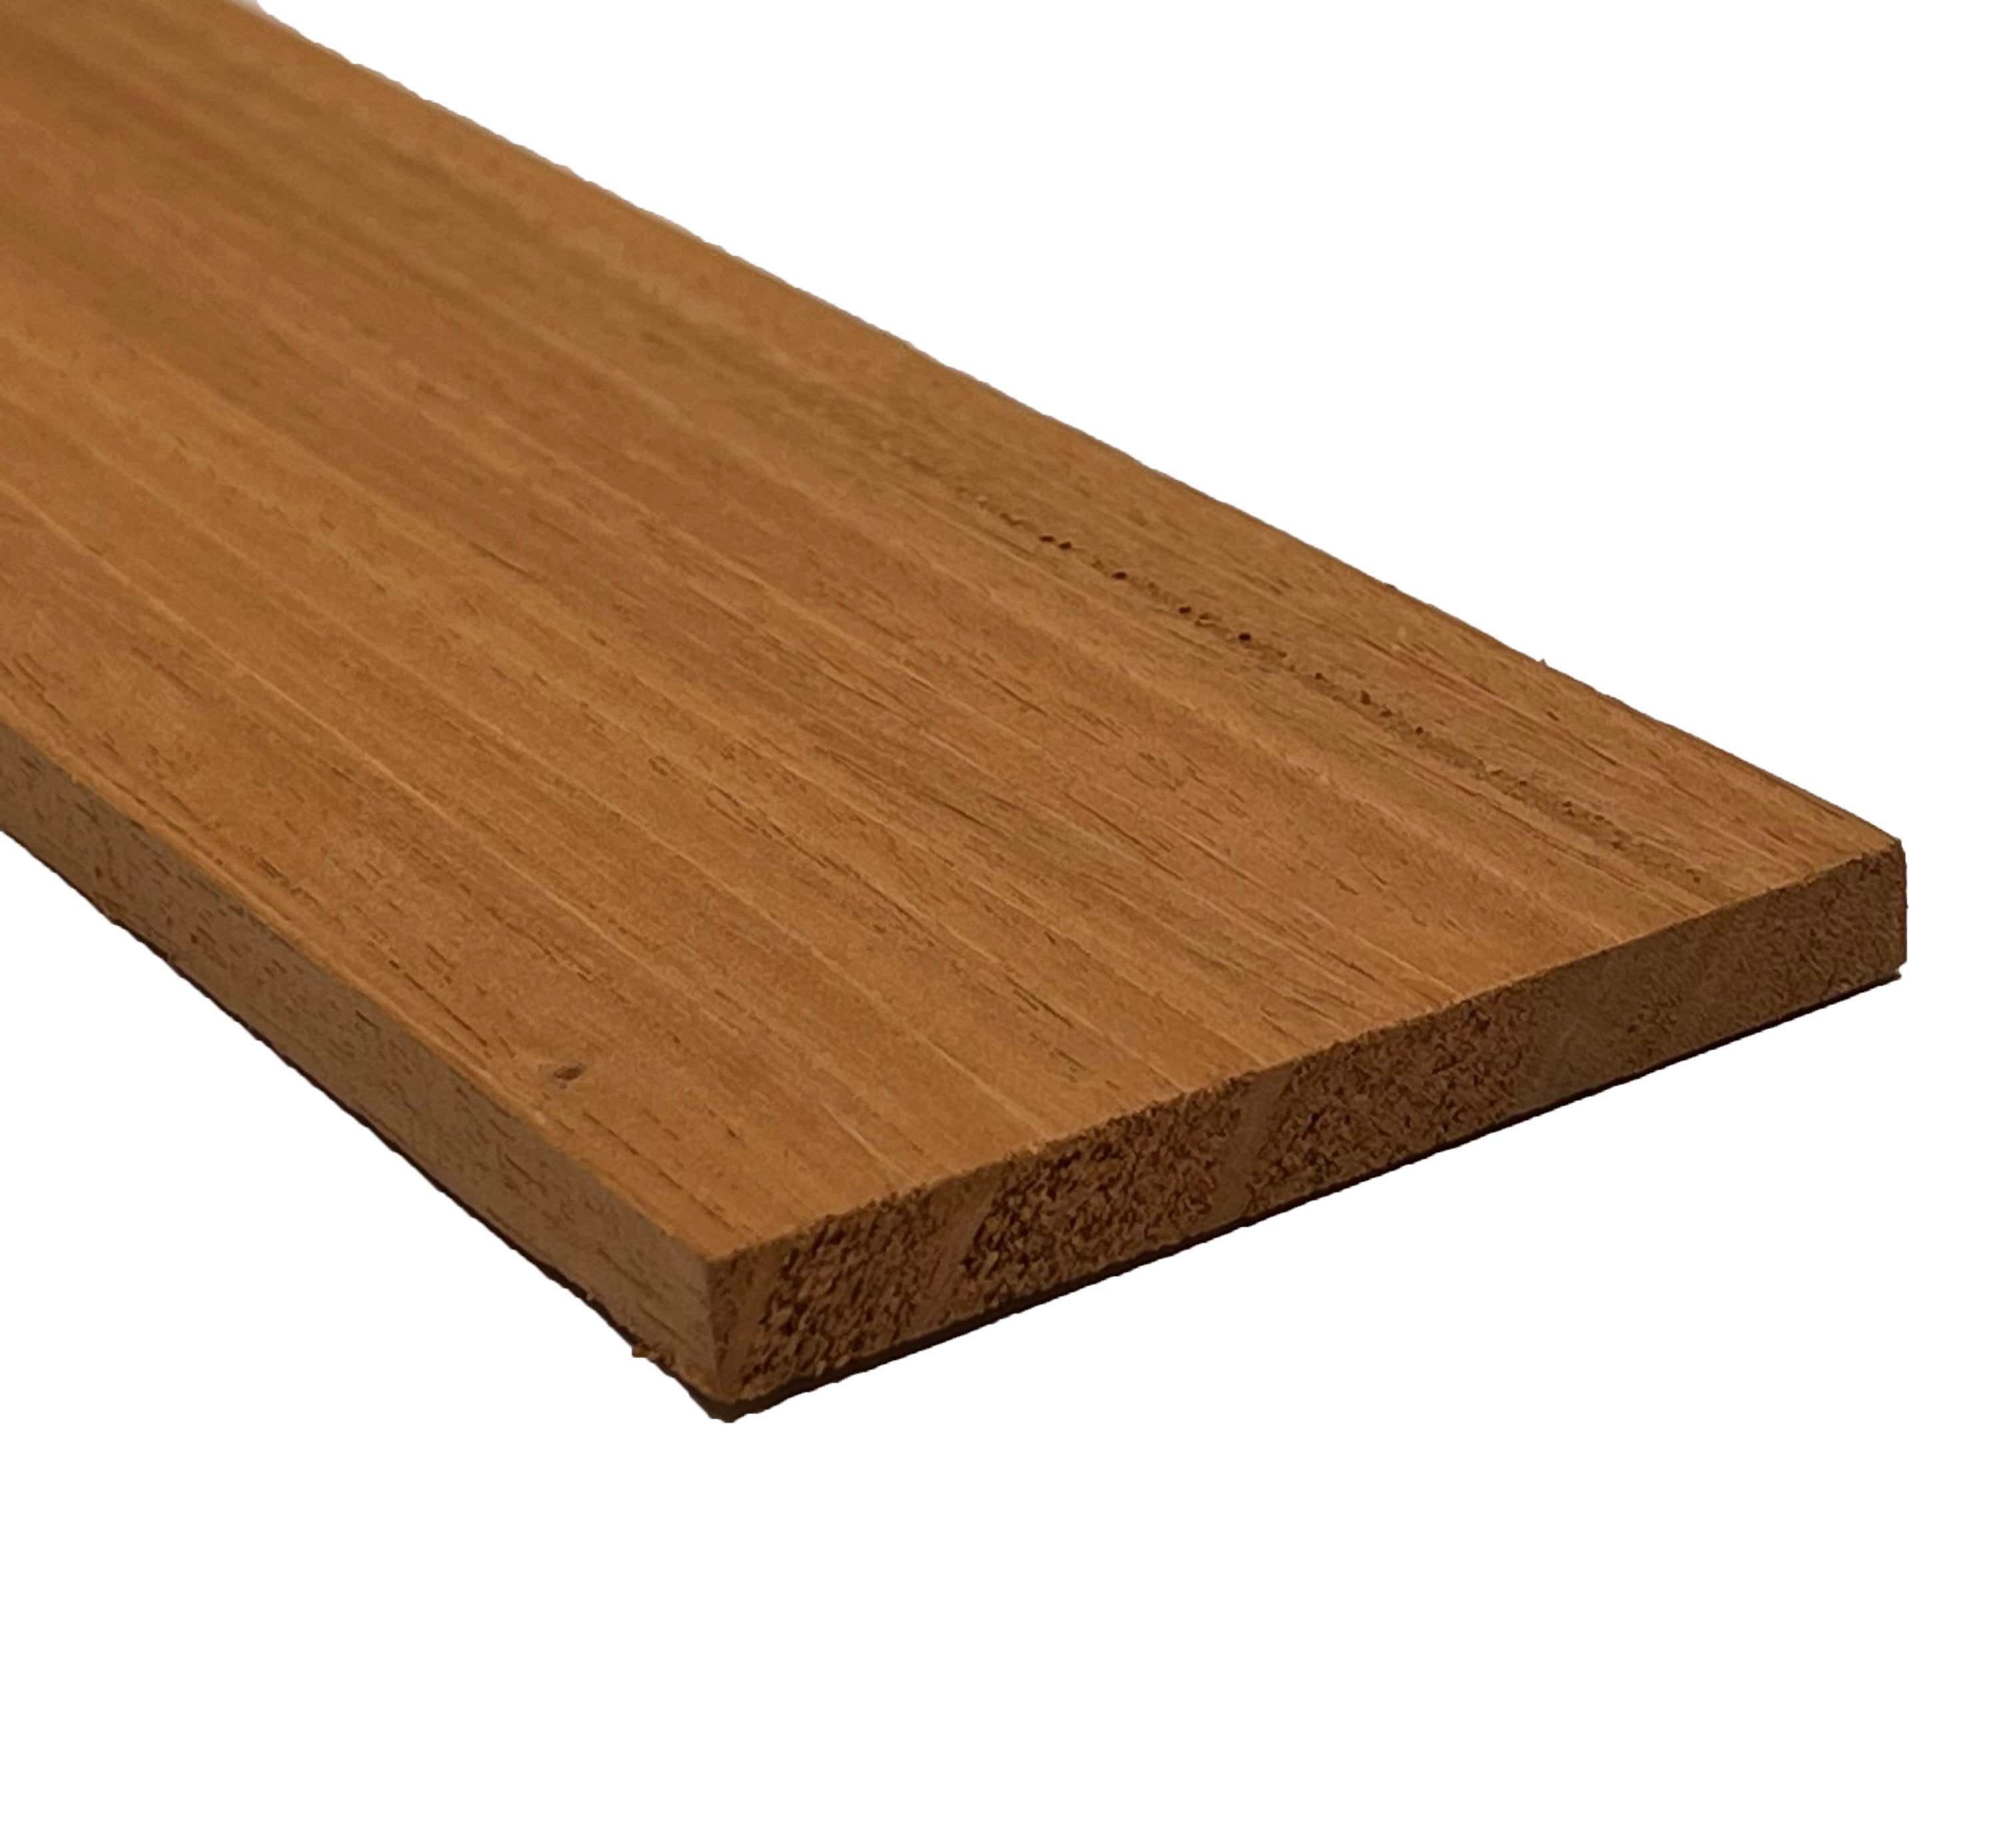 Honduran Mahogany Thin Stock Lumber Boards Wood Crafts - Exotic Wood Zone - Buy online Across USA 